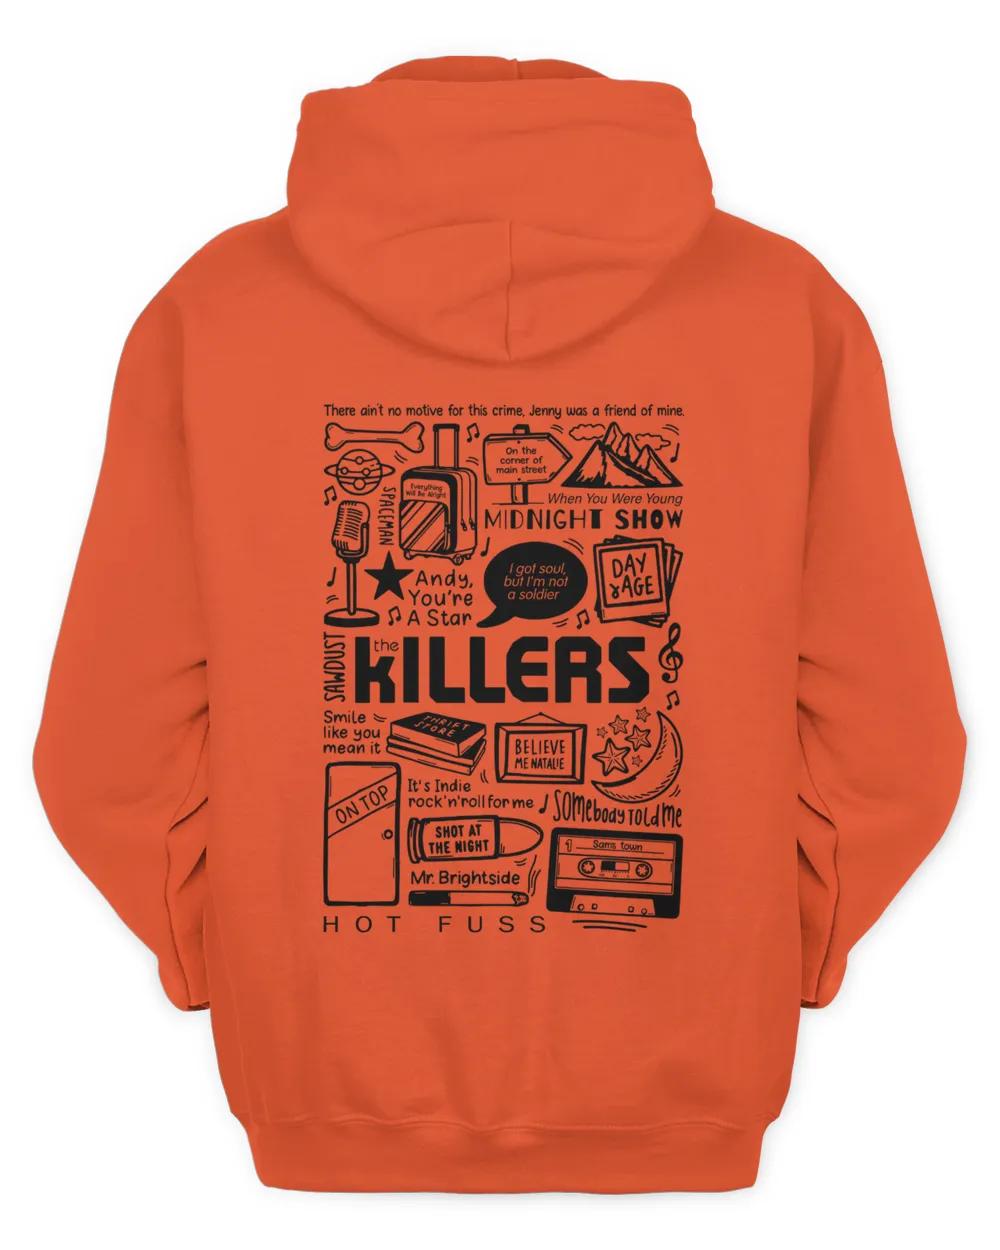 The Killers Tee